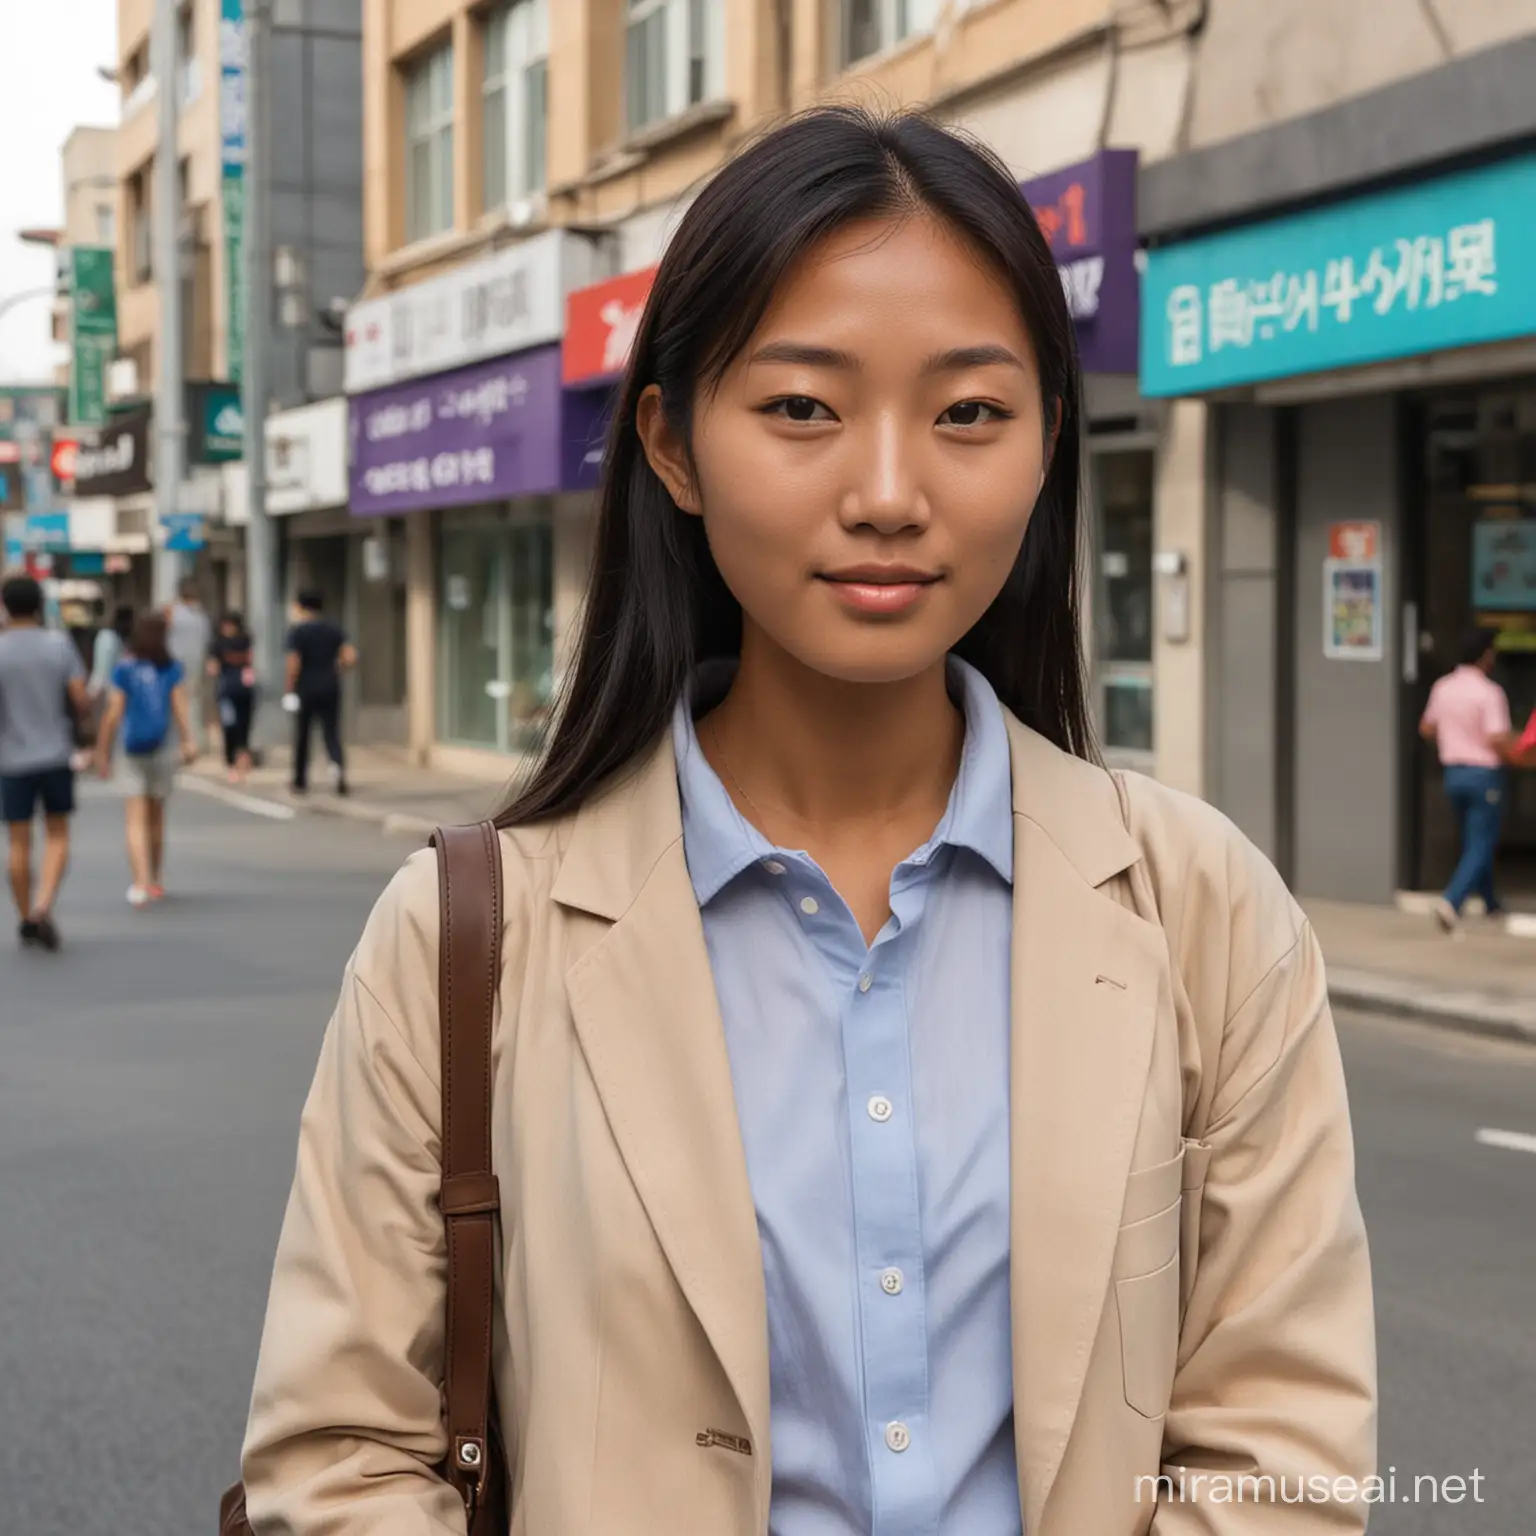 Korean Teenage Girl in School Uniform on Urban Street